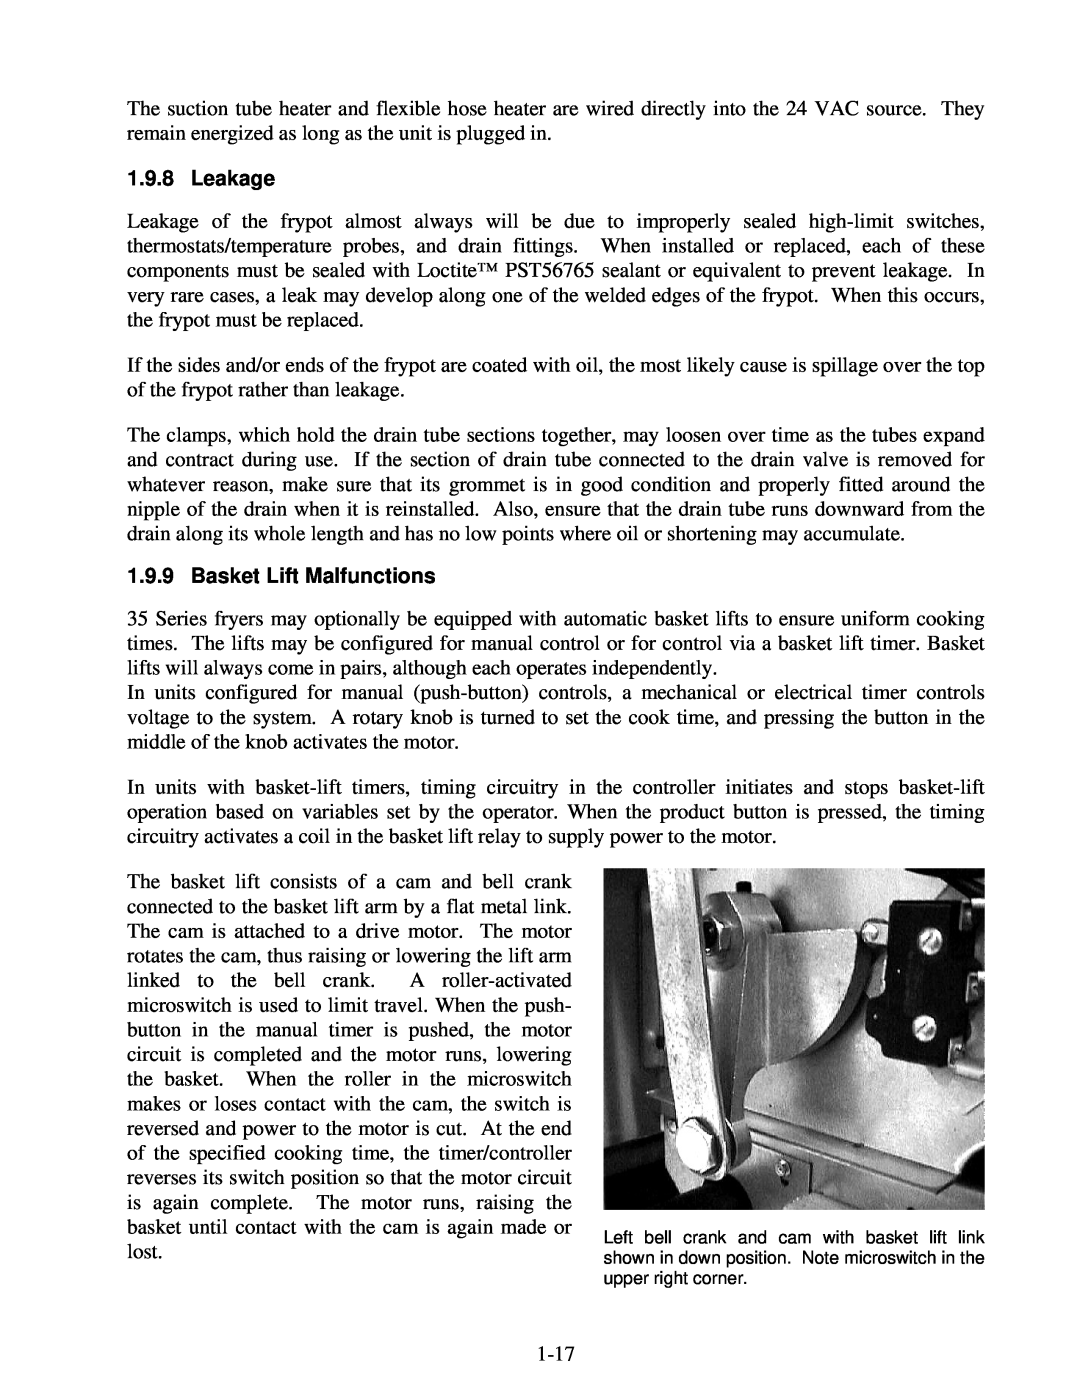 Frymaster 35 Series manual Leakage, Basket Lift Malfunctions 